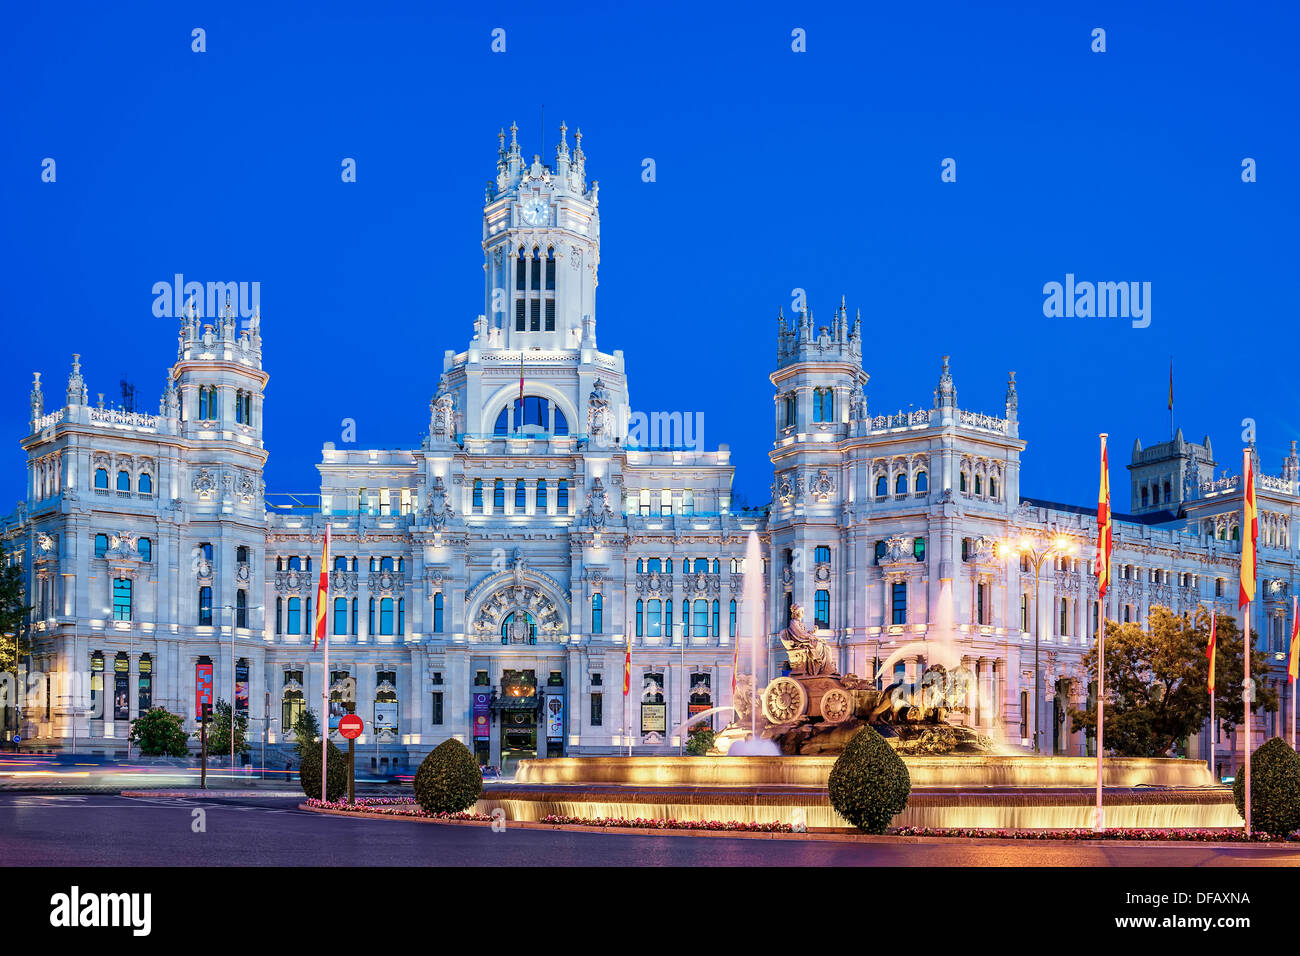 Plaza de la Cibeles by night, Madrid, Spain. Stock Photo